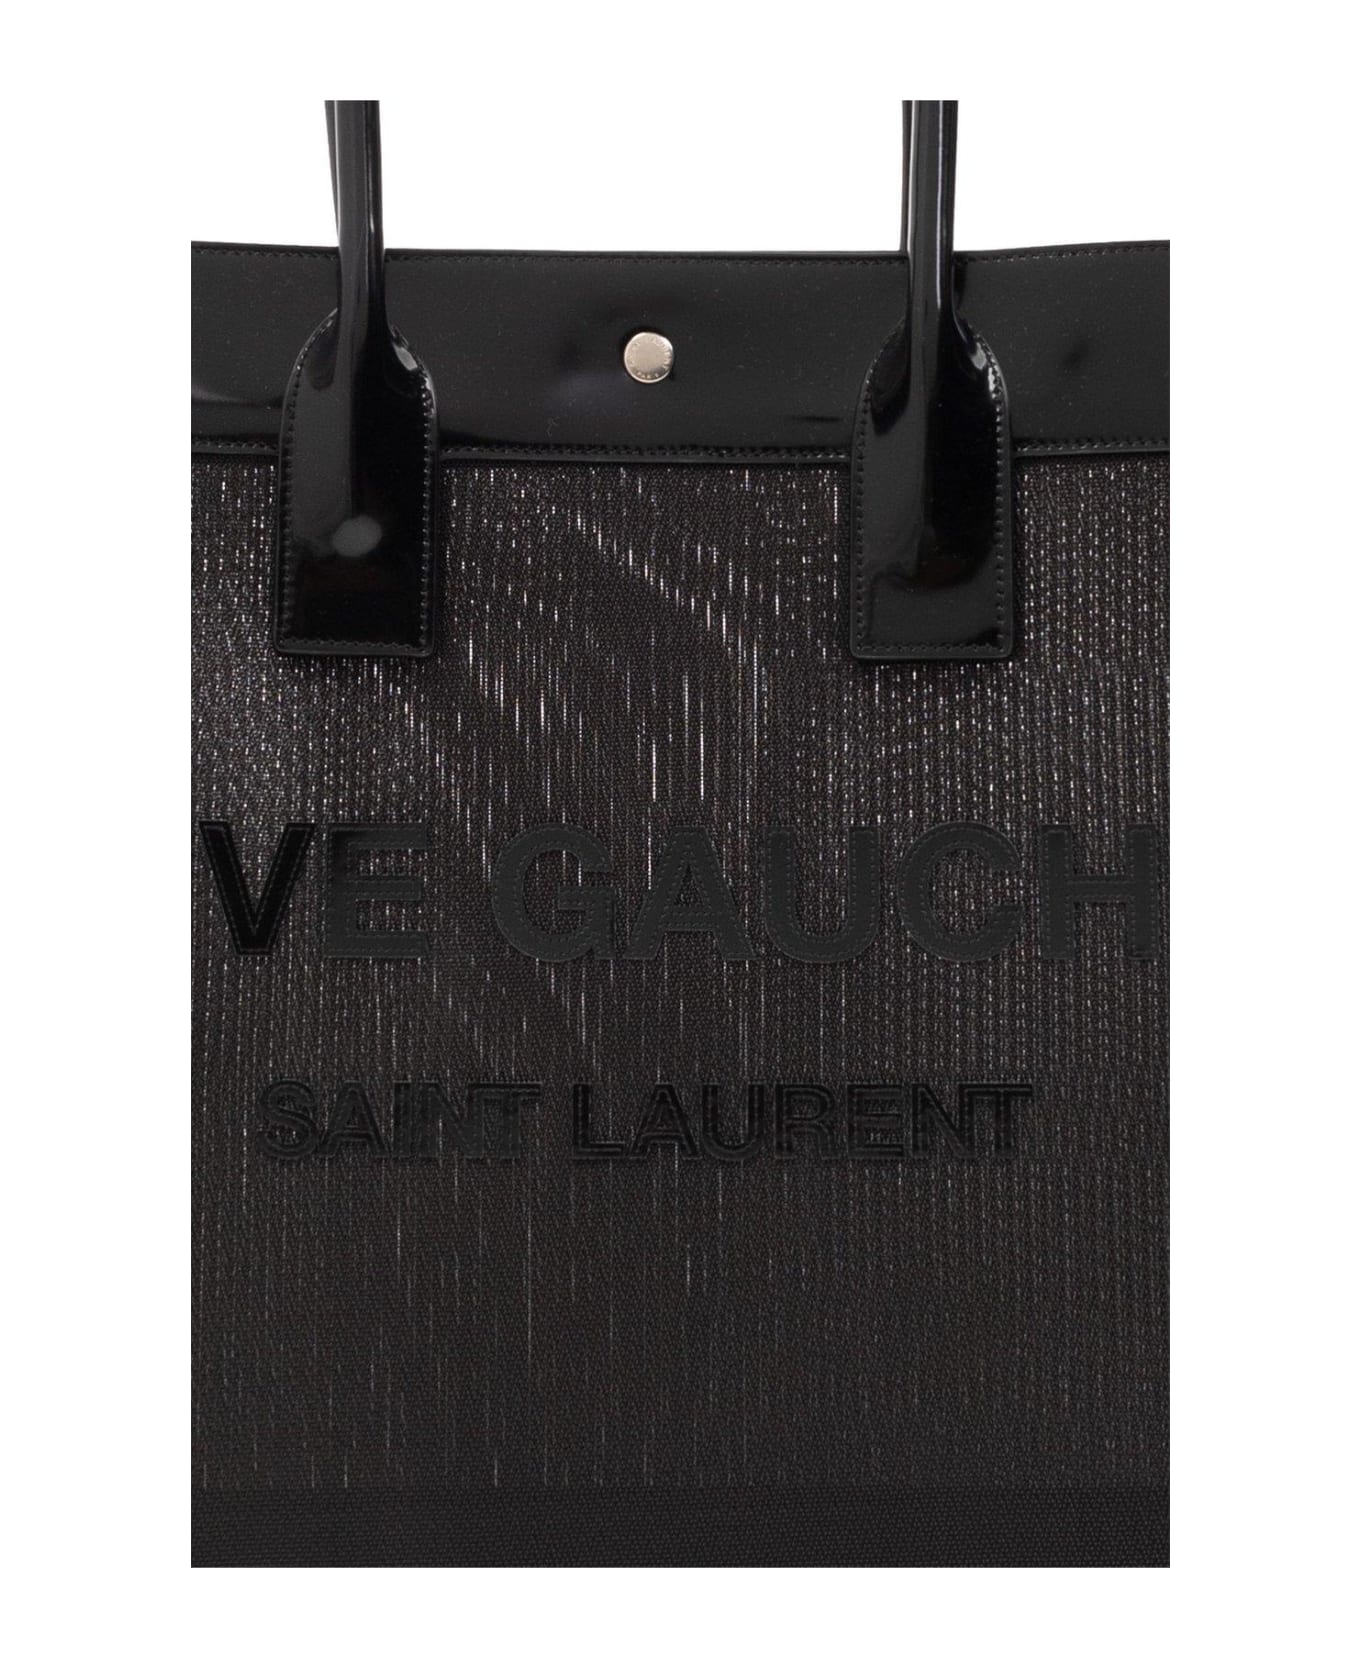 Saint Laurent Rive Gauche Top Handle Bag - Black